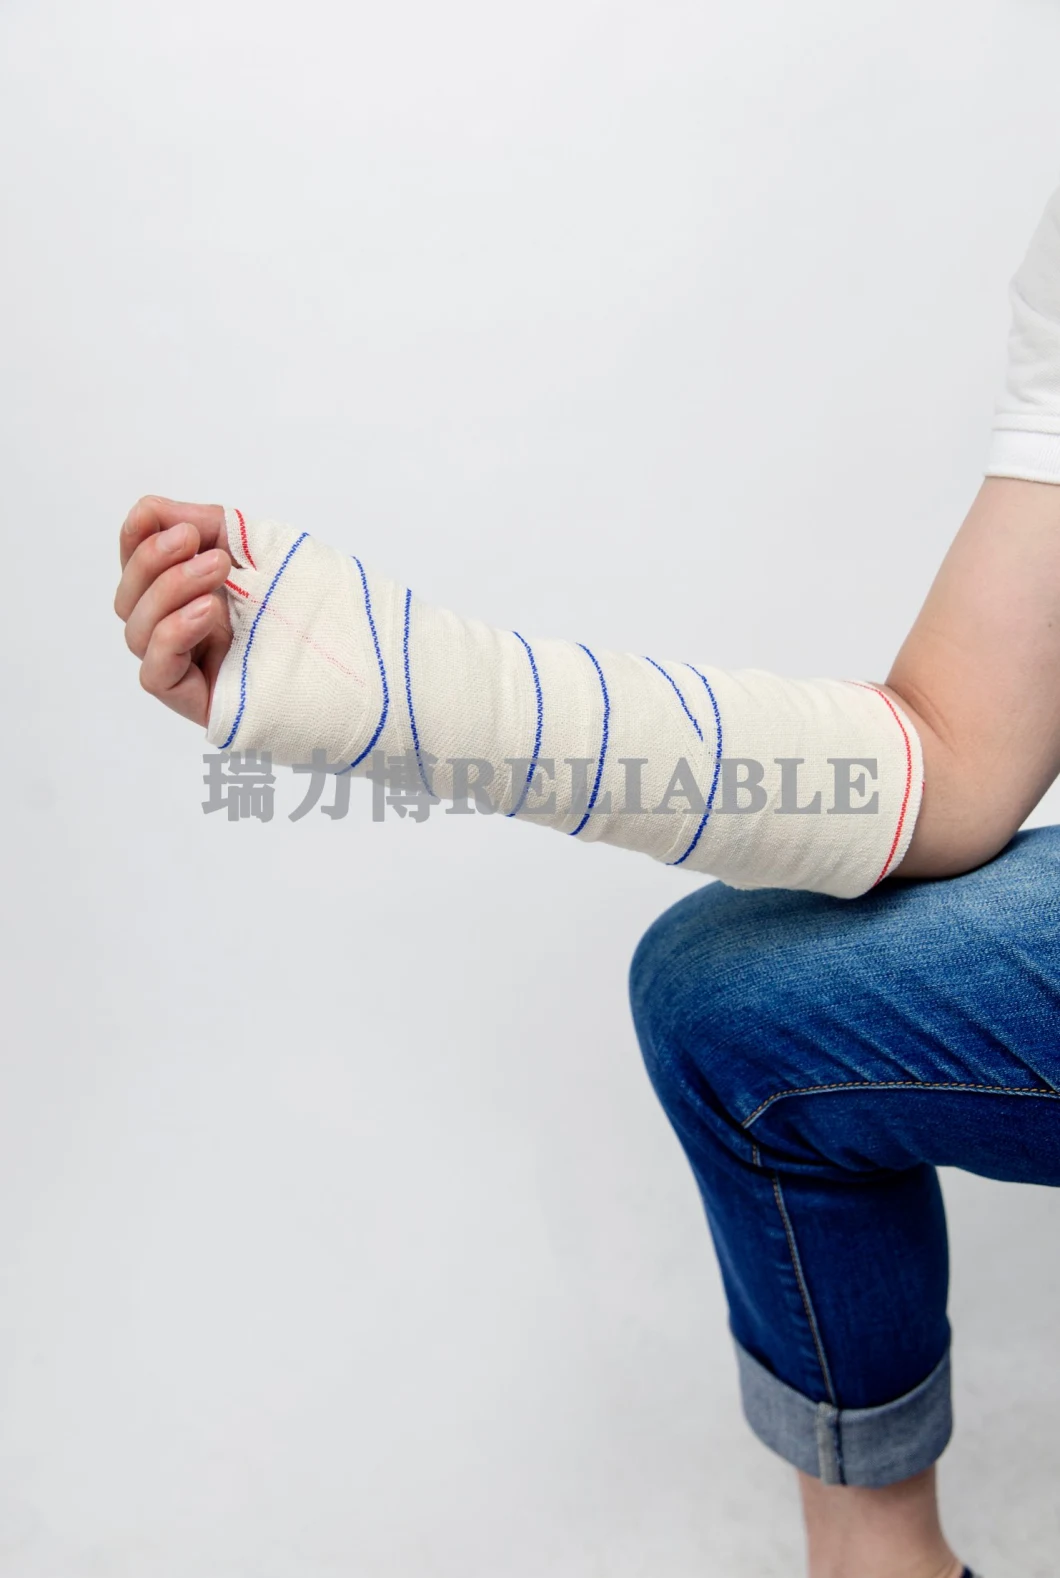 Othopedic Leg Splint Medical Casting Tape Orthopedic Splint Emergency